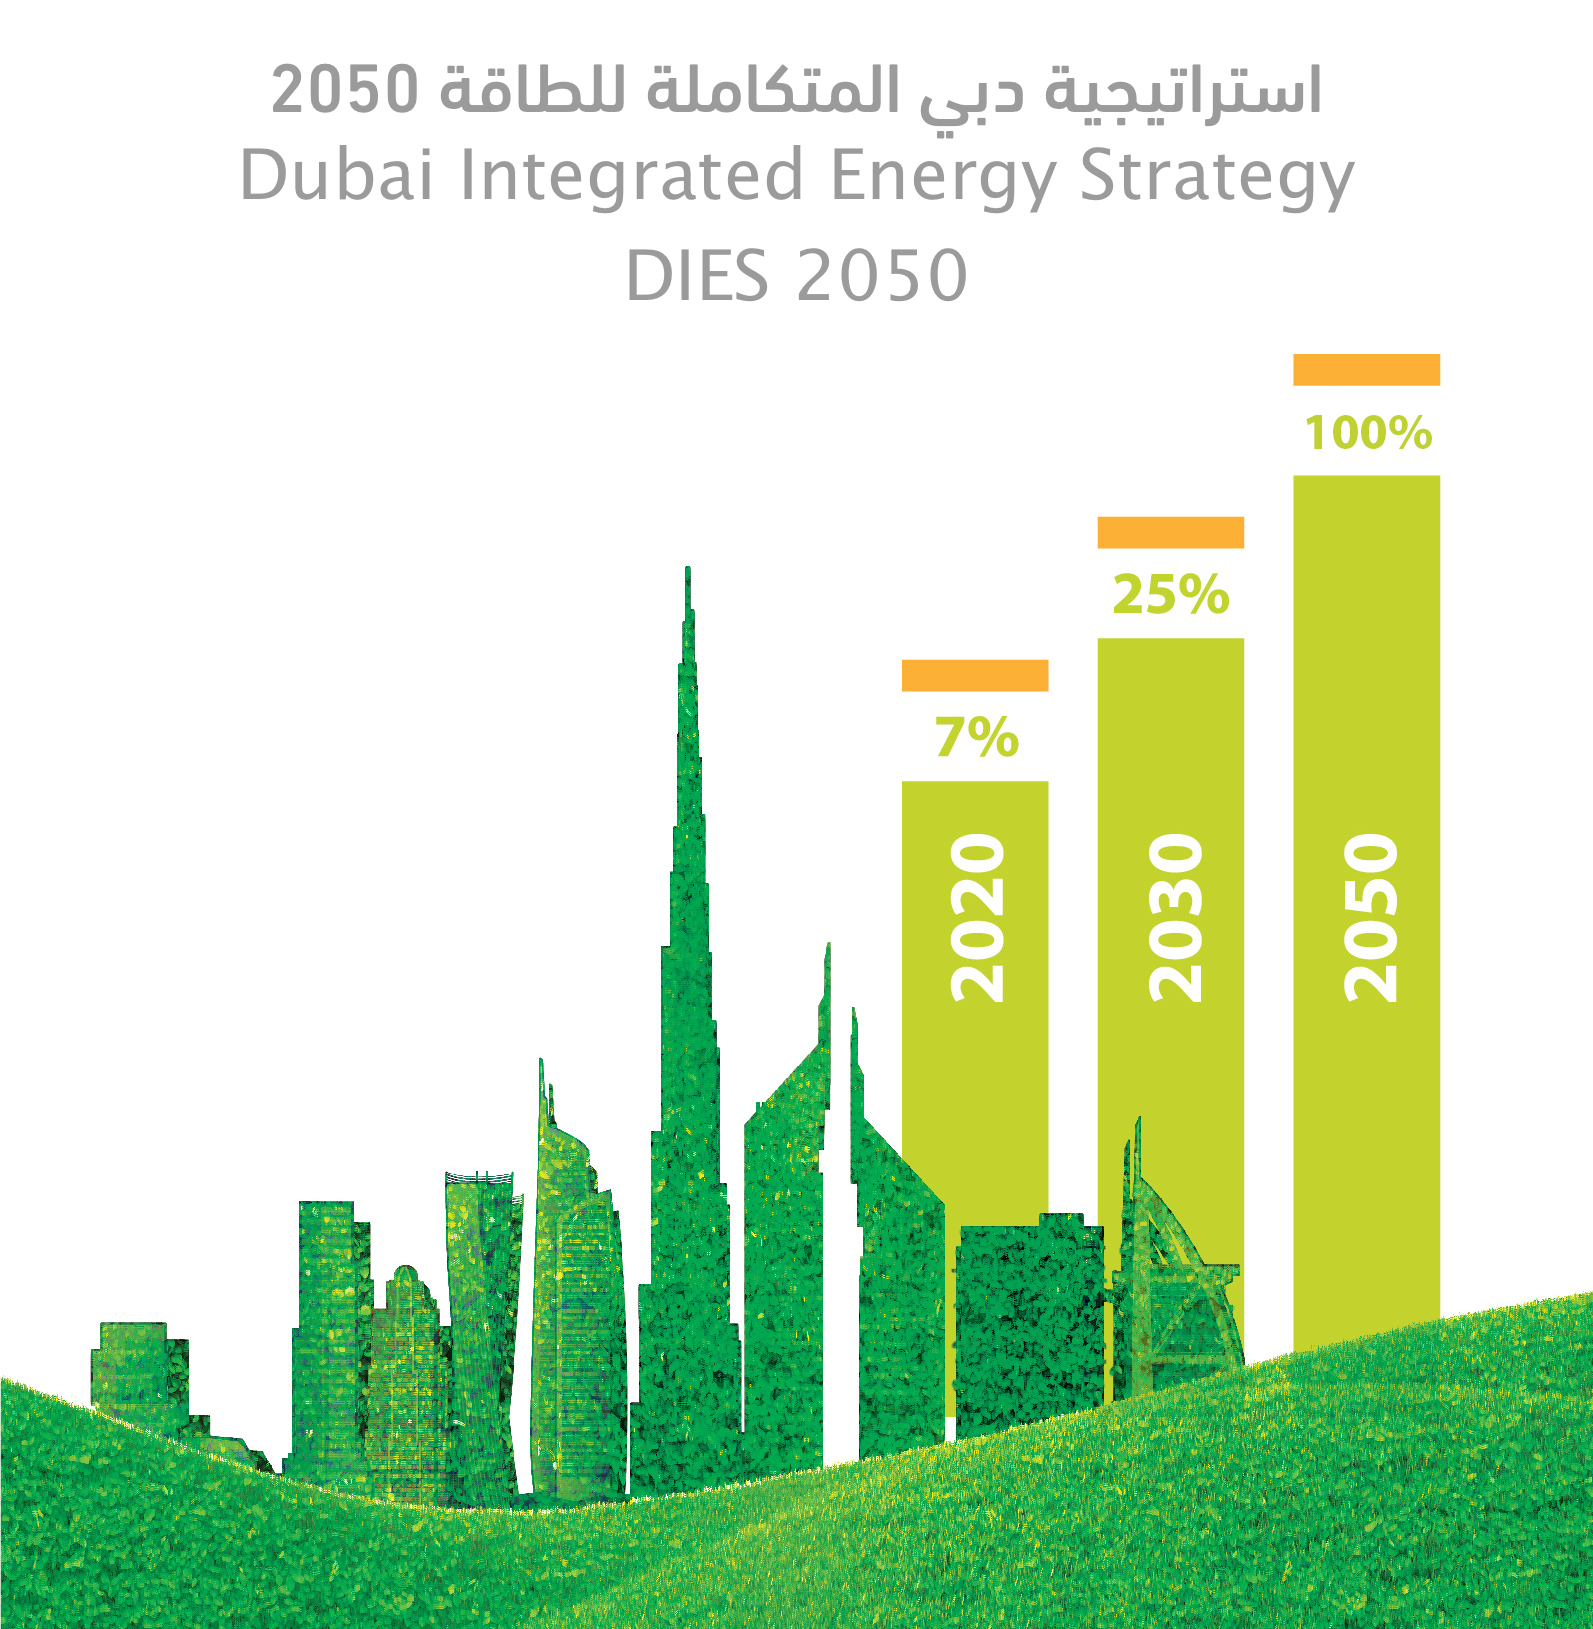 Dubai Integrated Energy Strategy DIES 2050